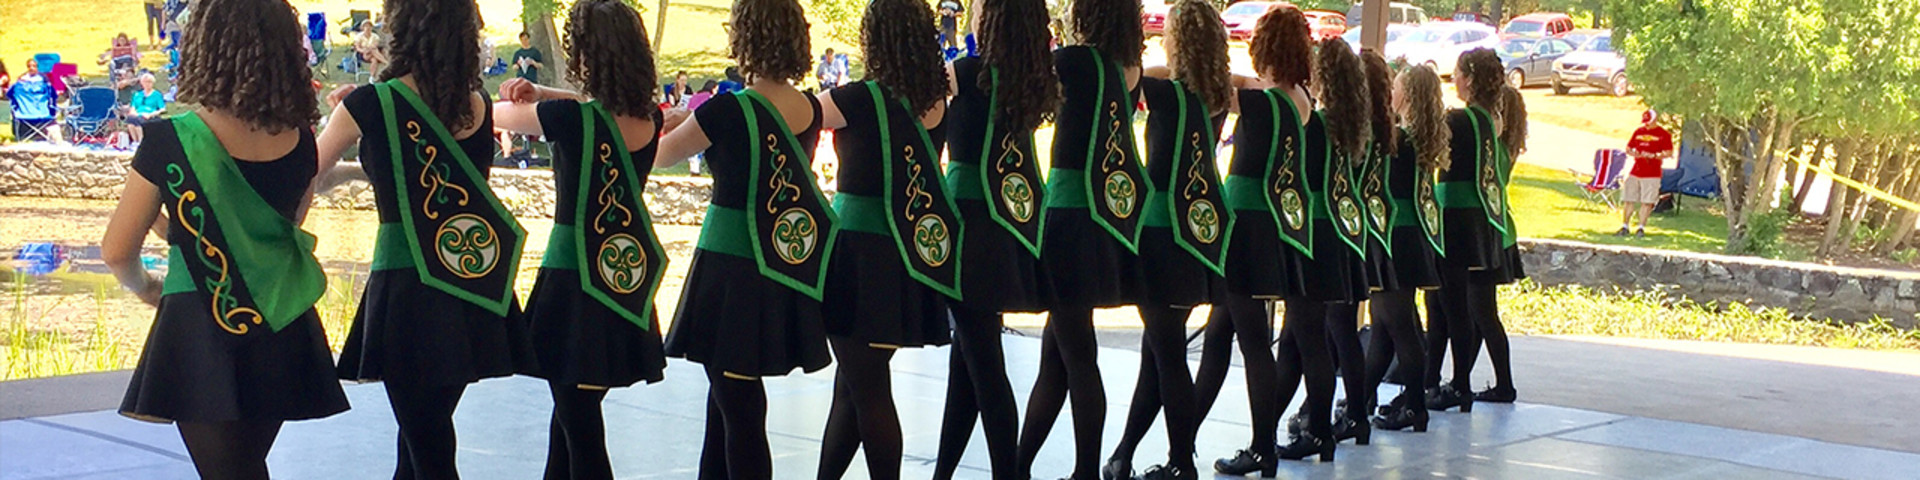 St. Patrick's Day Irish Step Dancing with Tir Na Nog